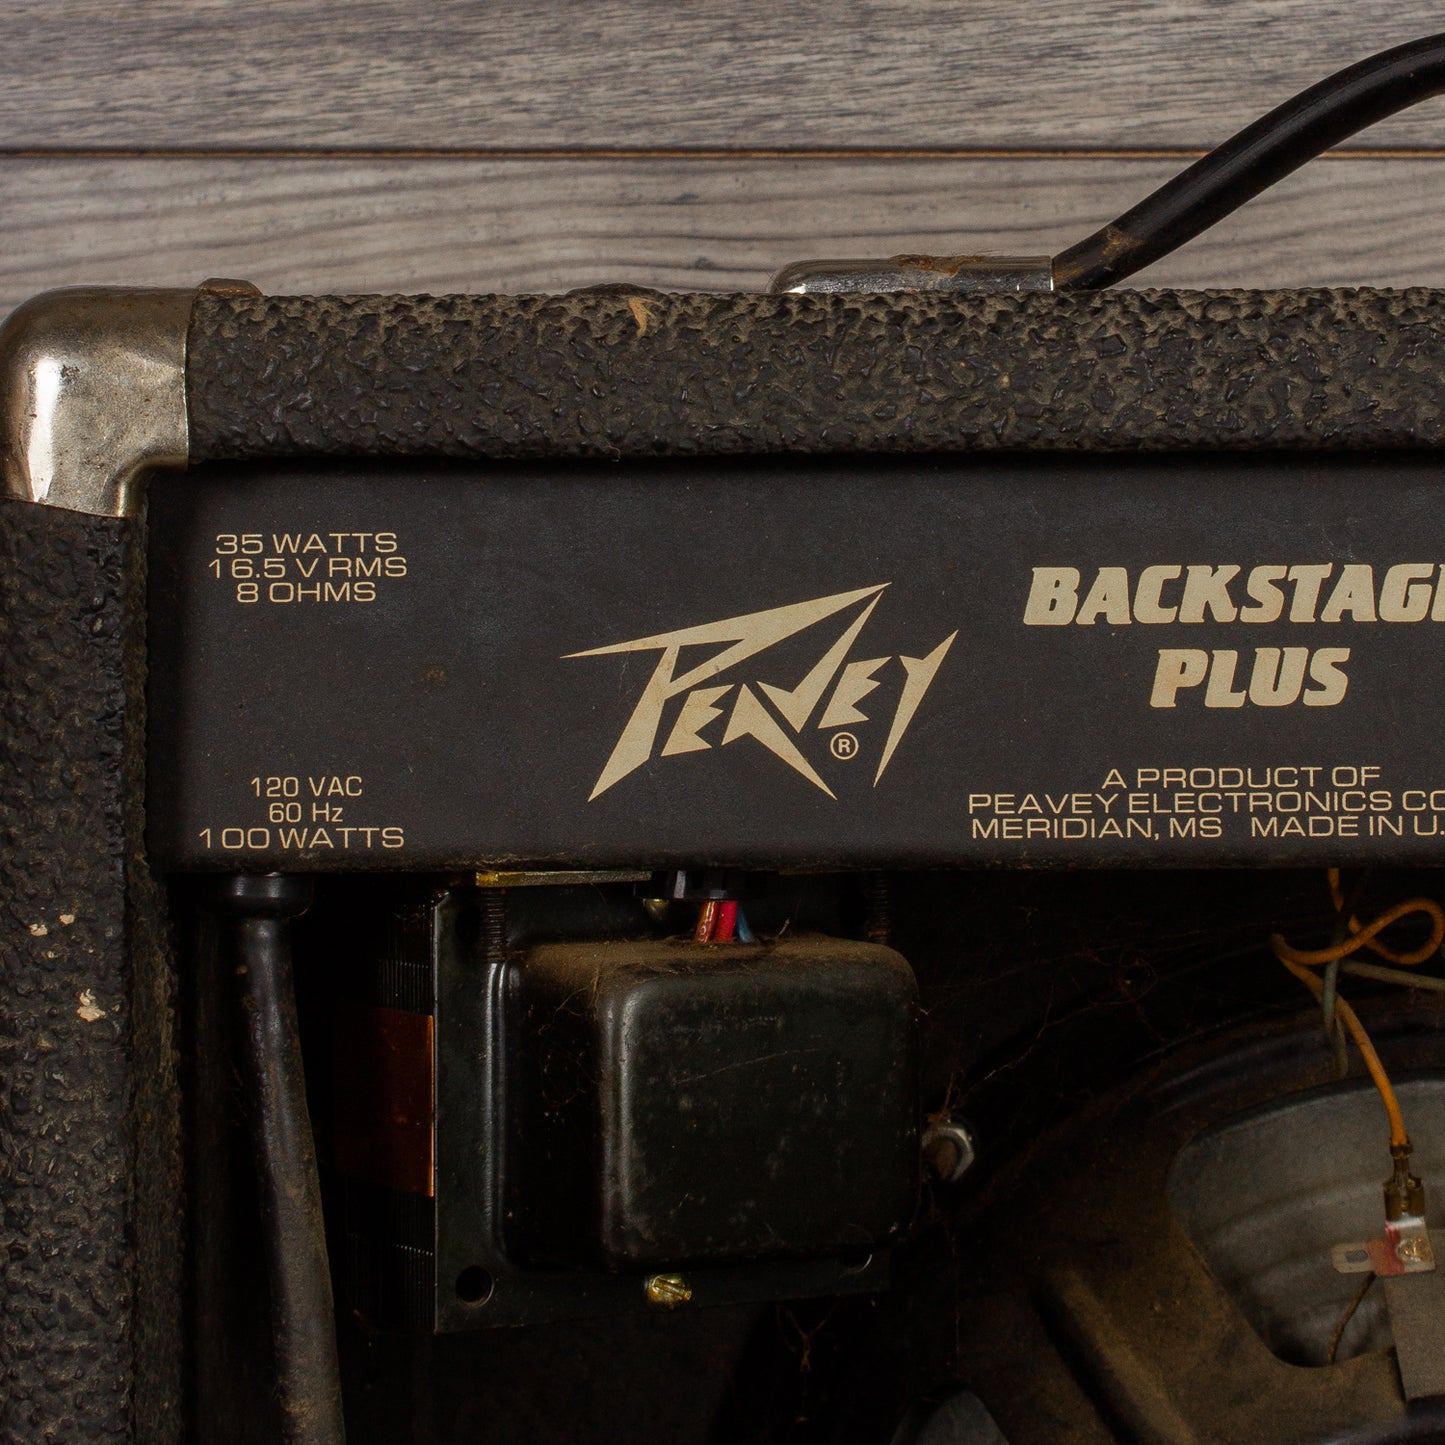 1980's Peavey Backstage Plus Amplifier